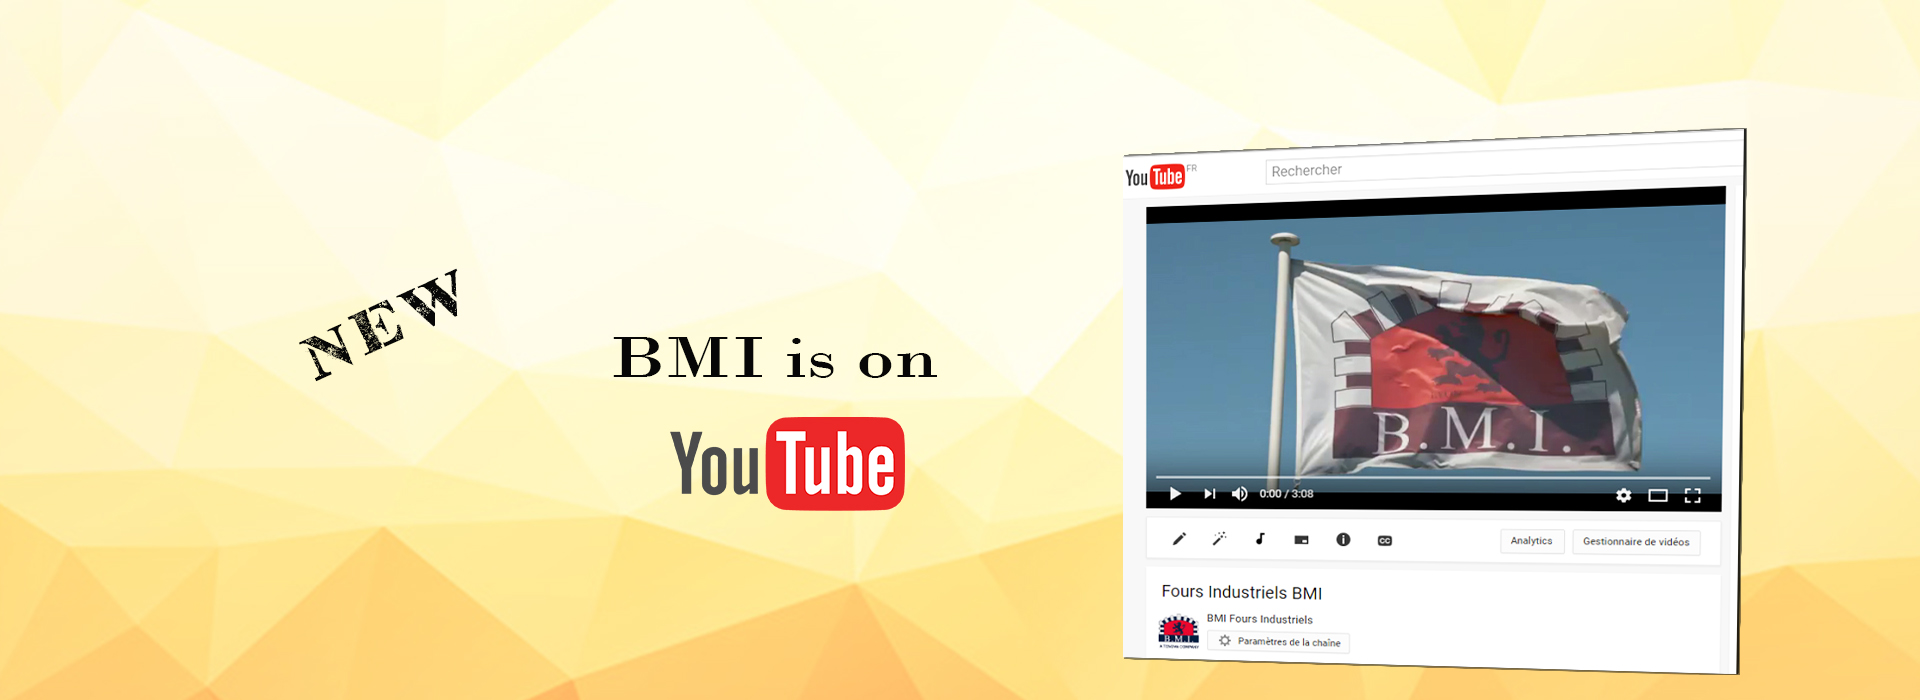 BMI on video